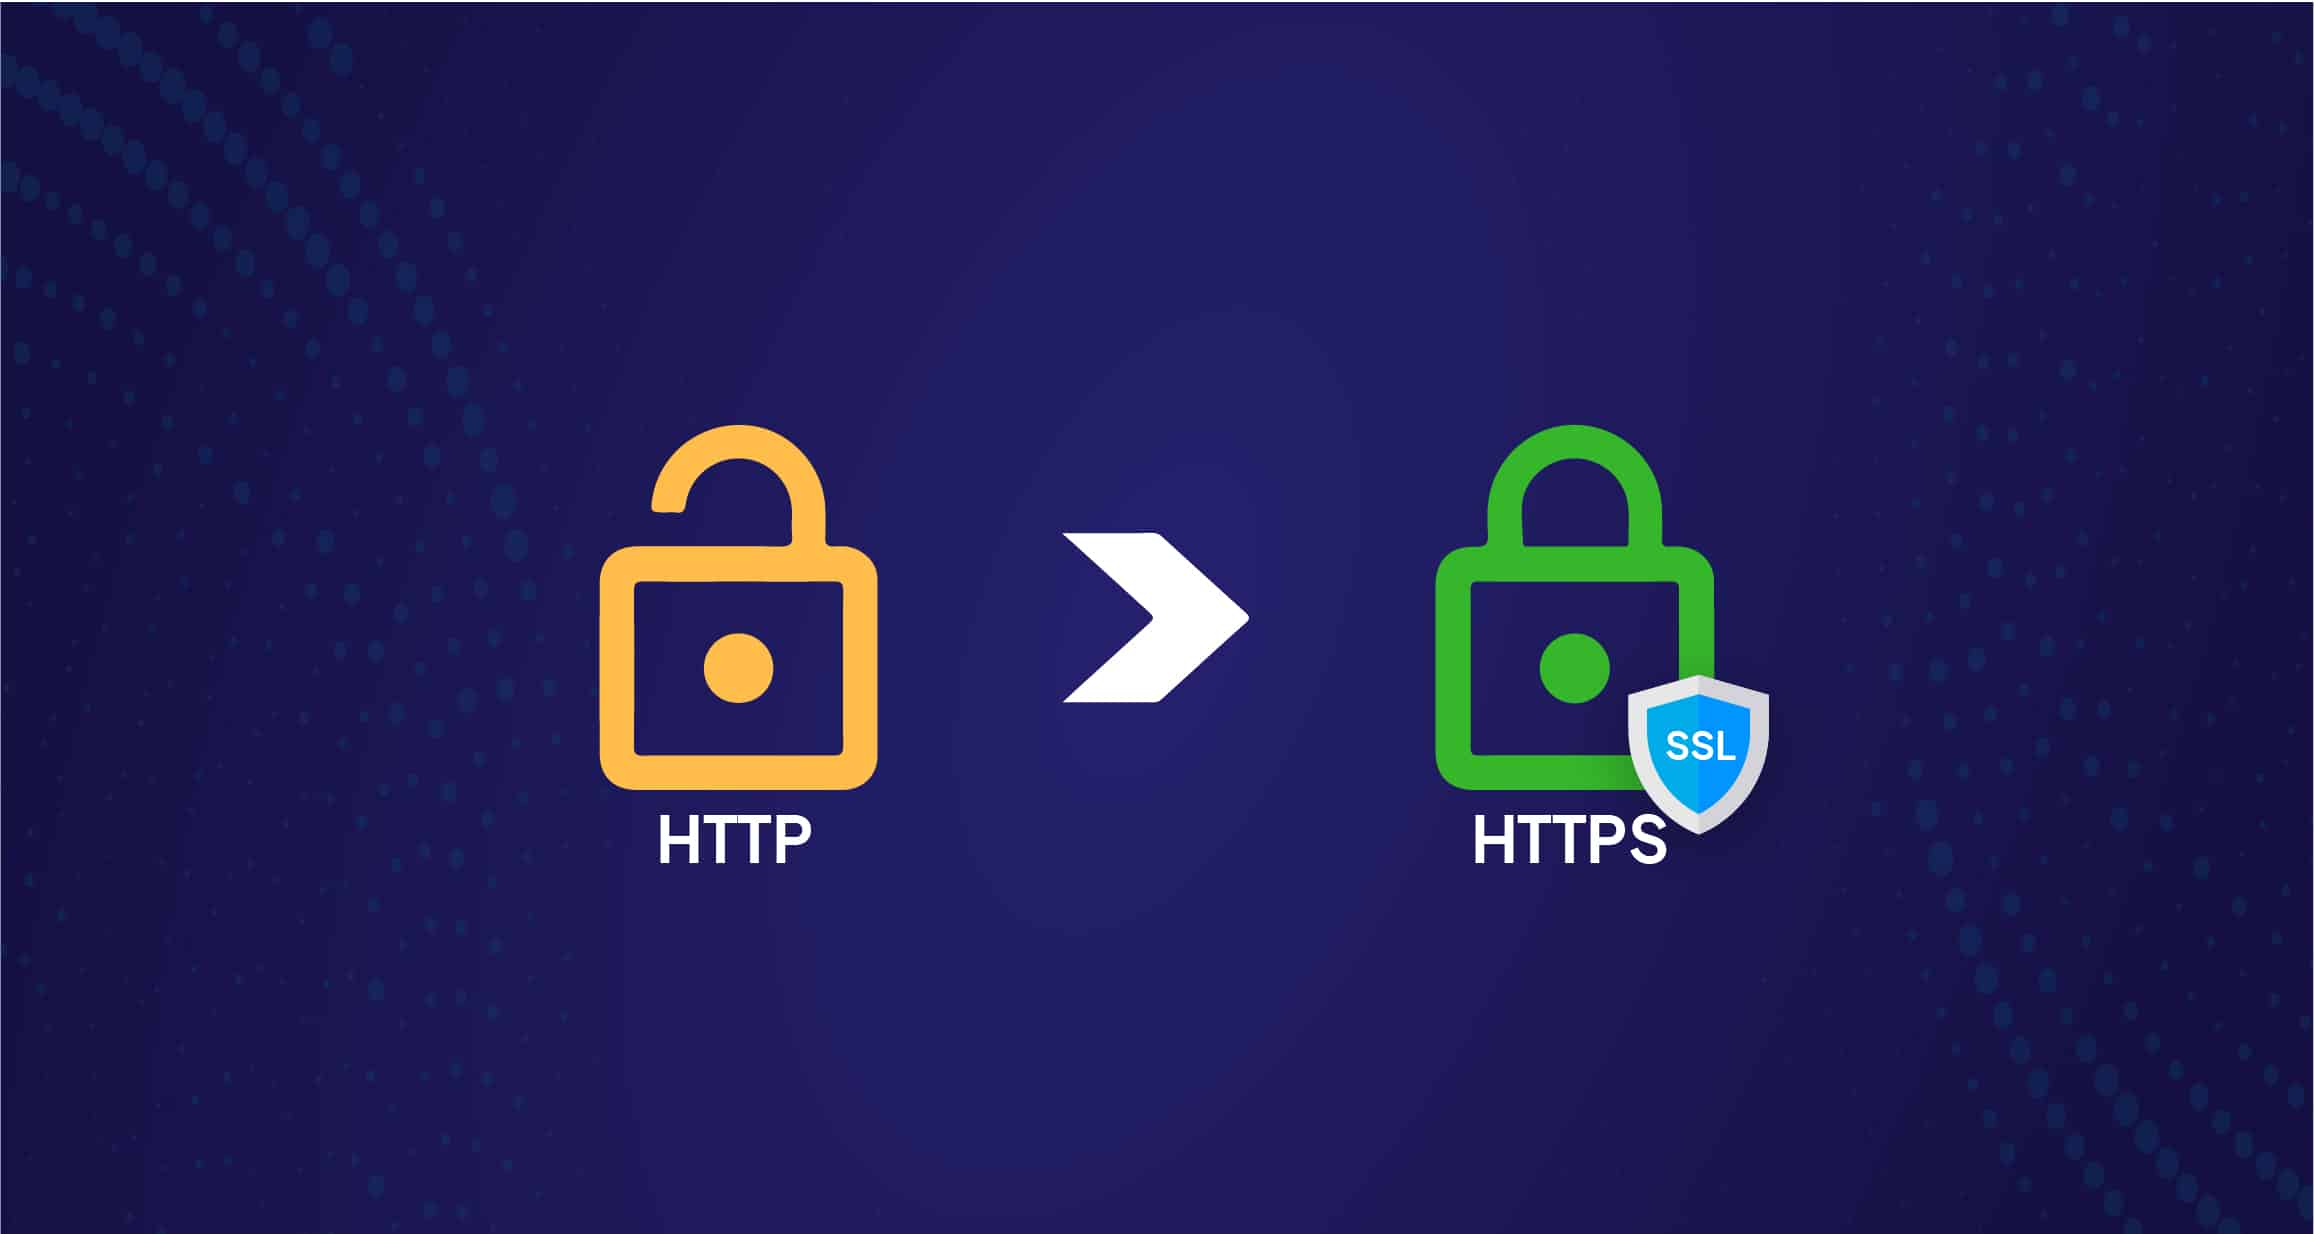 Jual QNAP NAS | Gunakan Protokol HTTPS